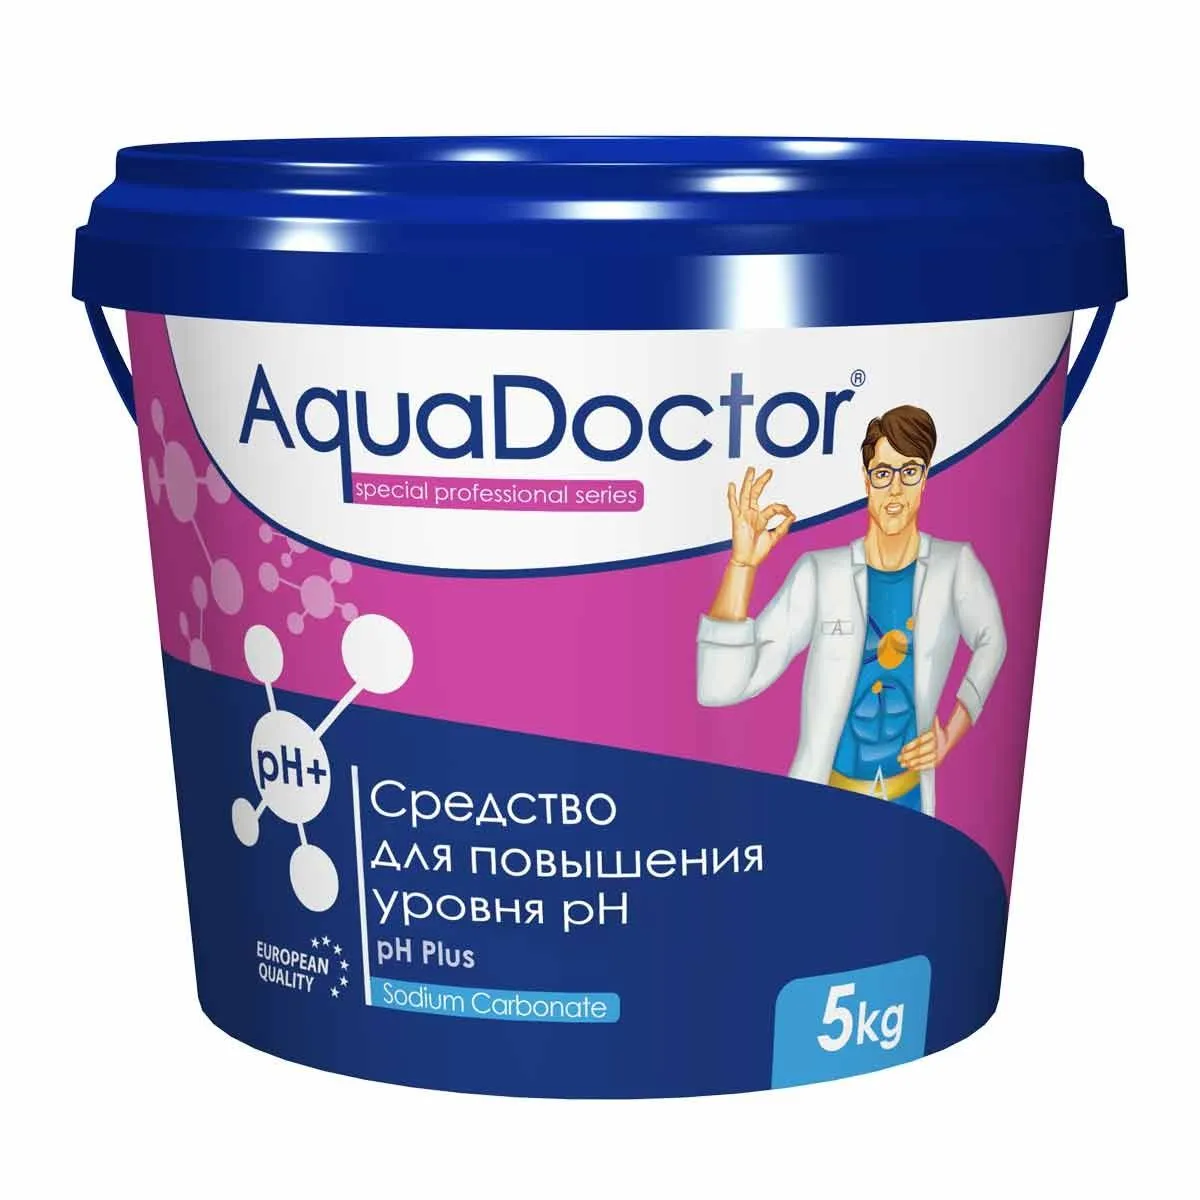 Средство для повышения уровня pH AquaDoctor pH Plus от магазина gidro-z